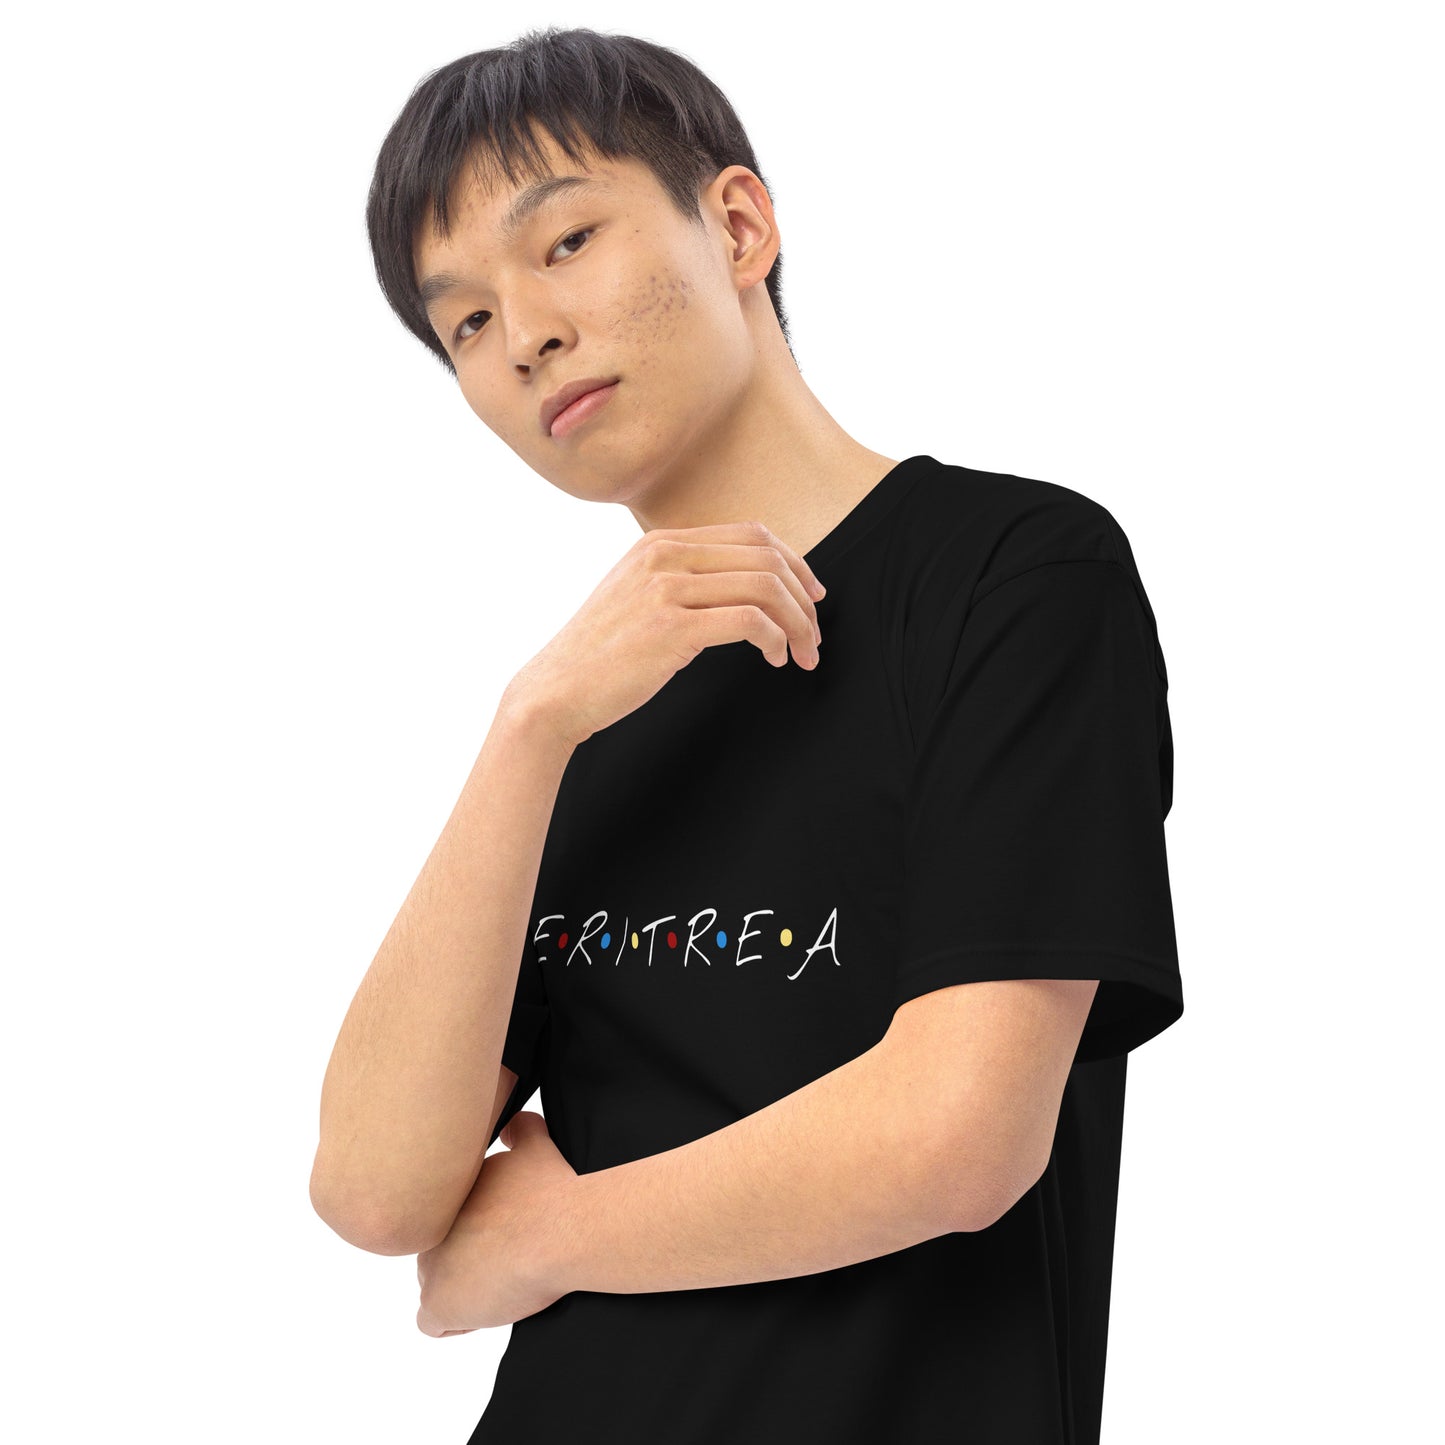 ERI Friends-Inspired T-Shirt!